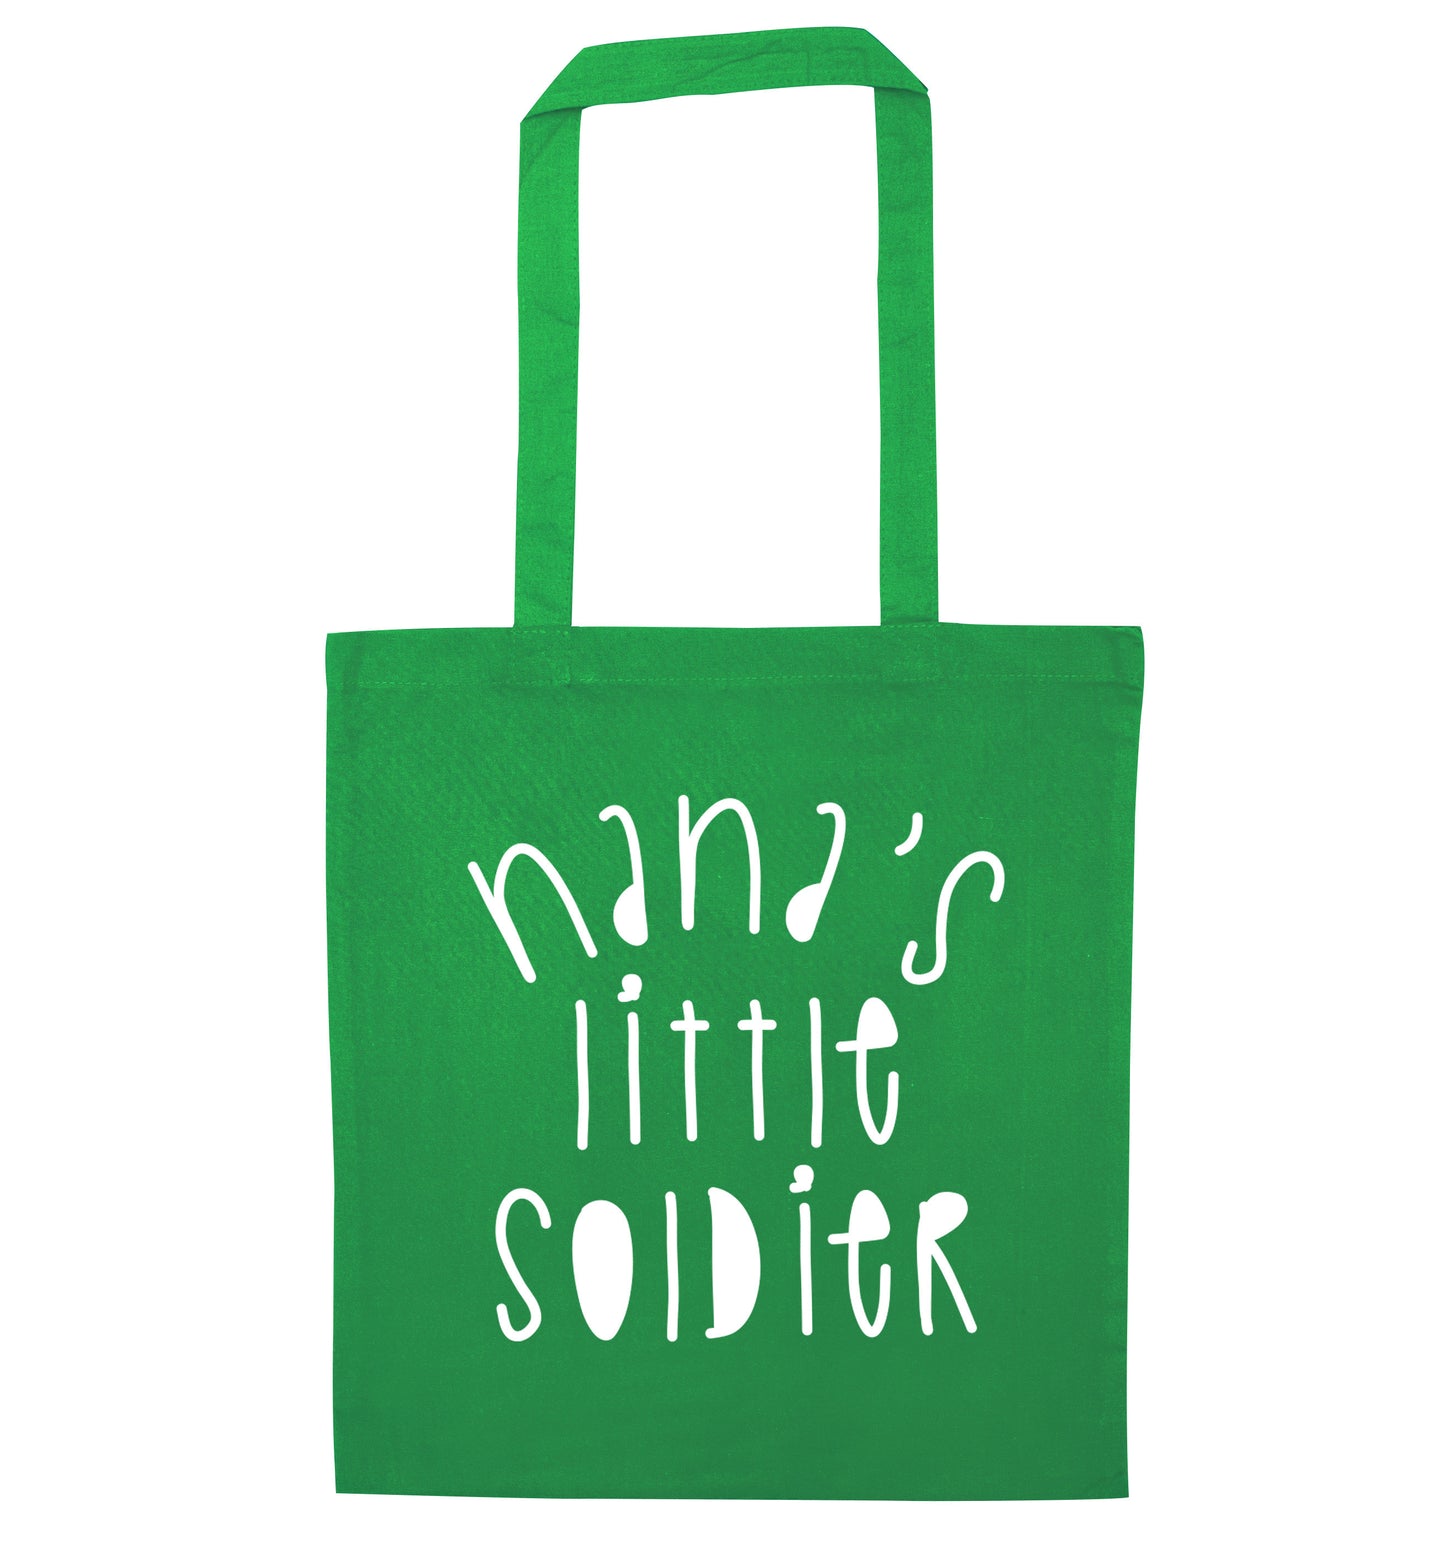 Nana's little soldier green tote bag